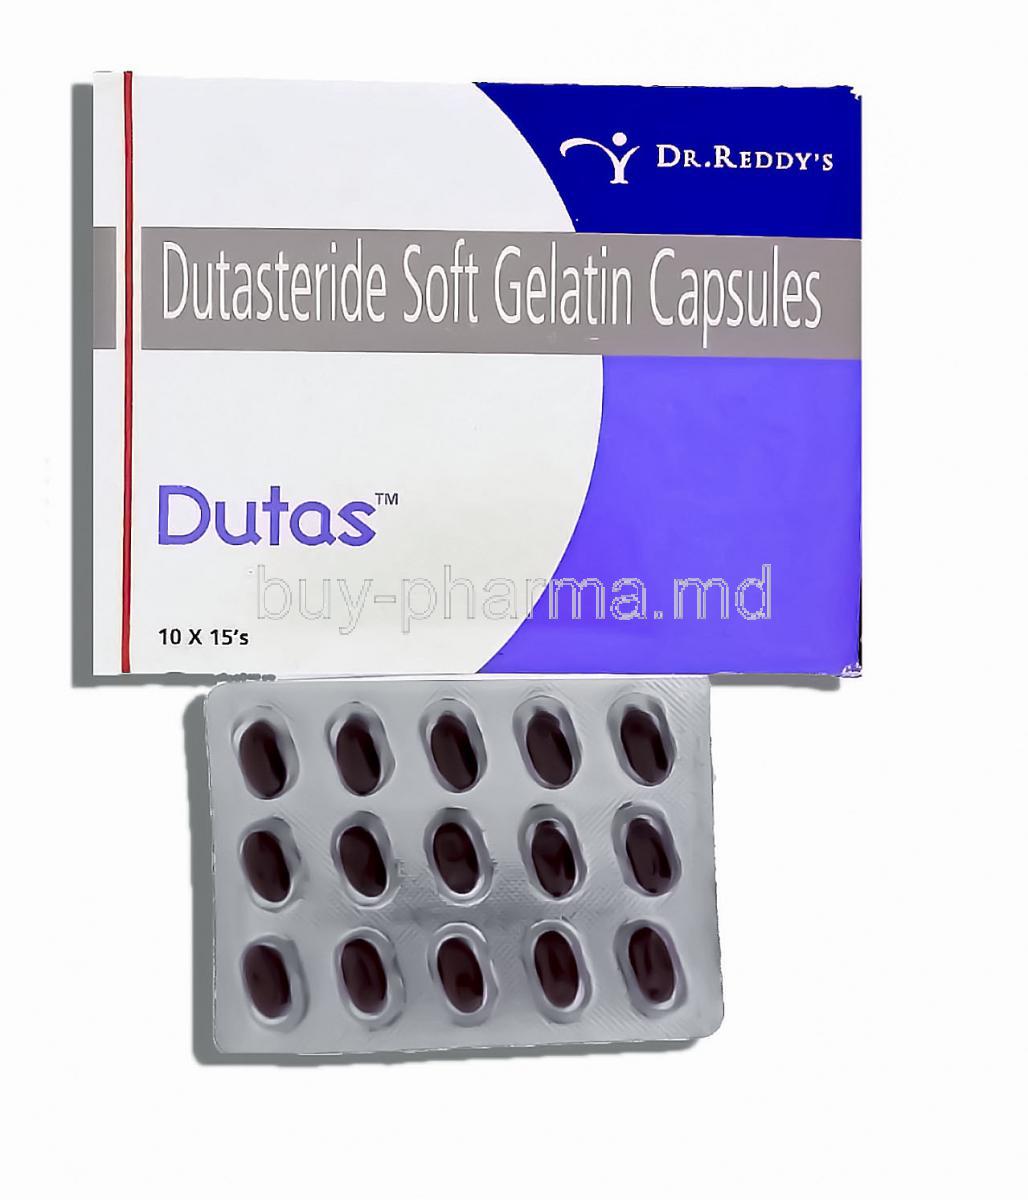 dutasteride medication used for